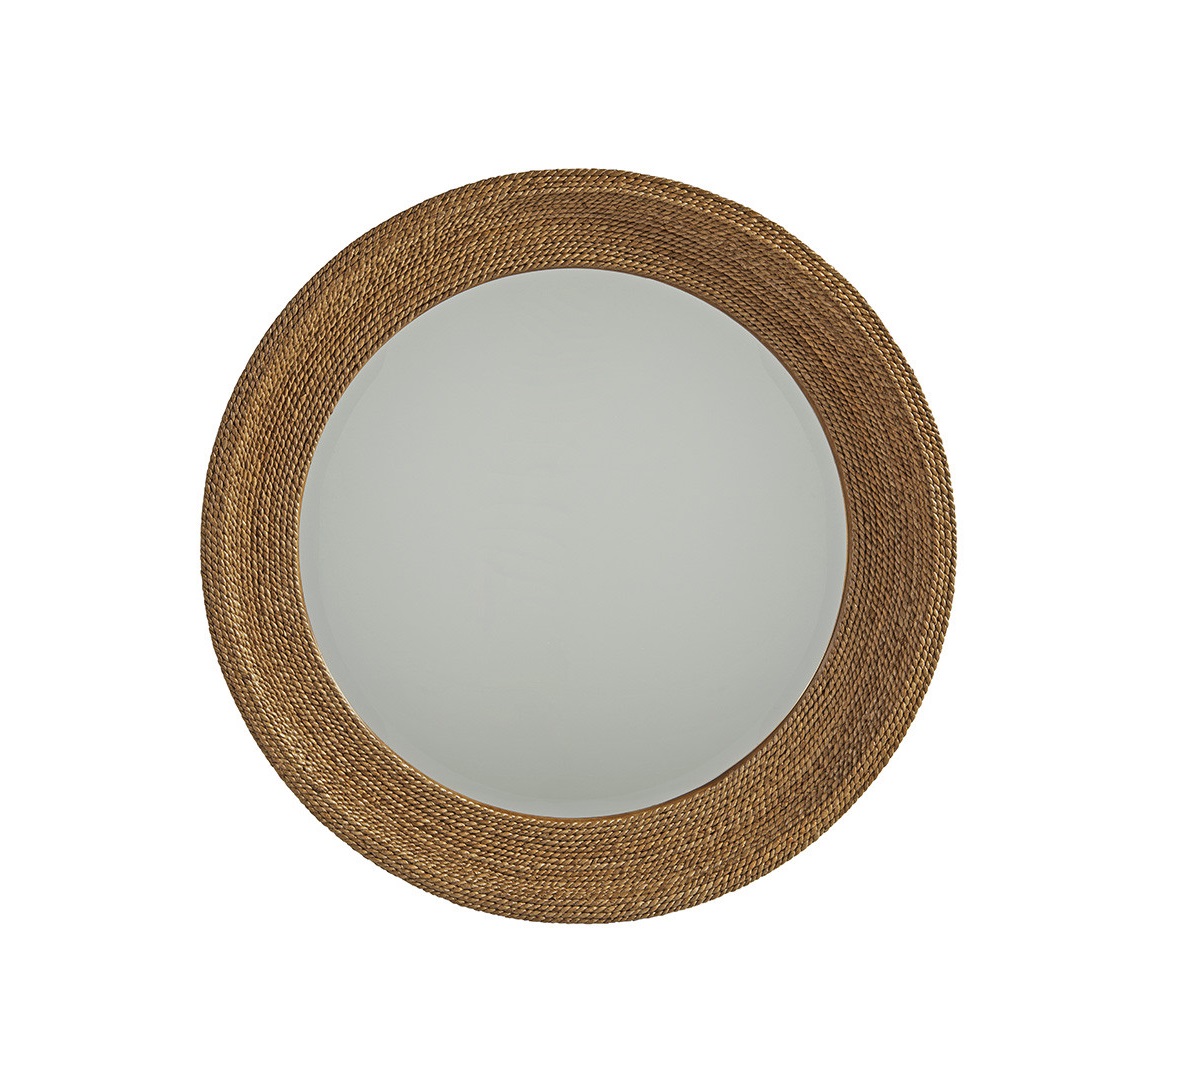 La Jolla Woven Round Mirror, Lexington Cheap Decorative Mirrors For Living Room, Brooklyn, New York, Furniture By ABD 